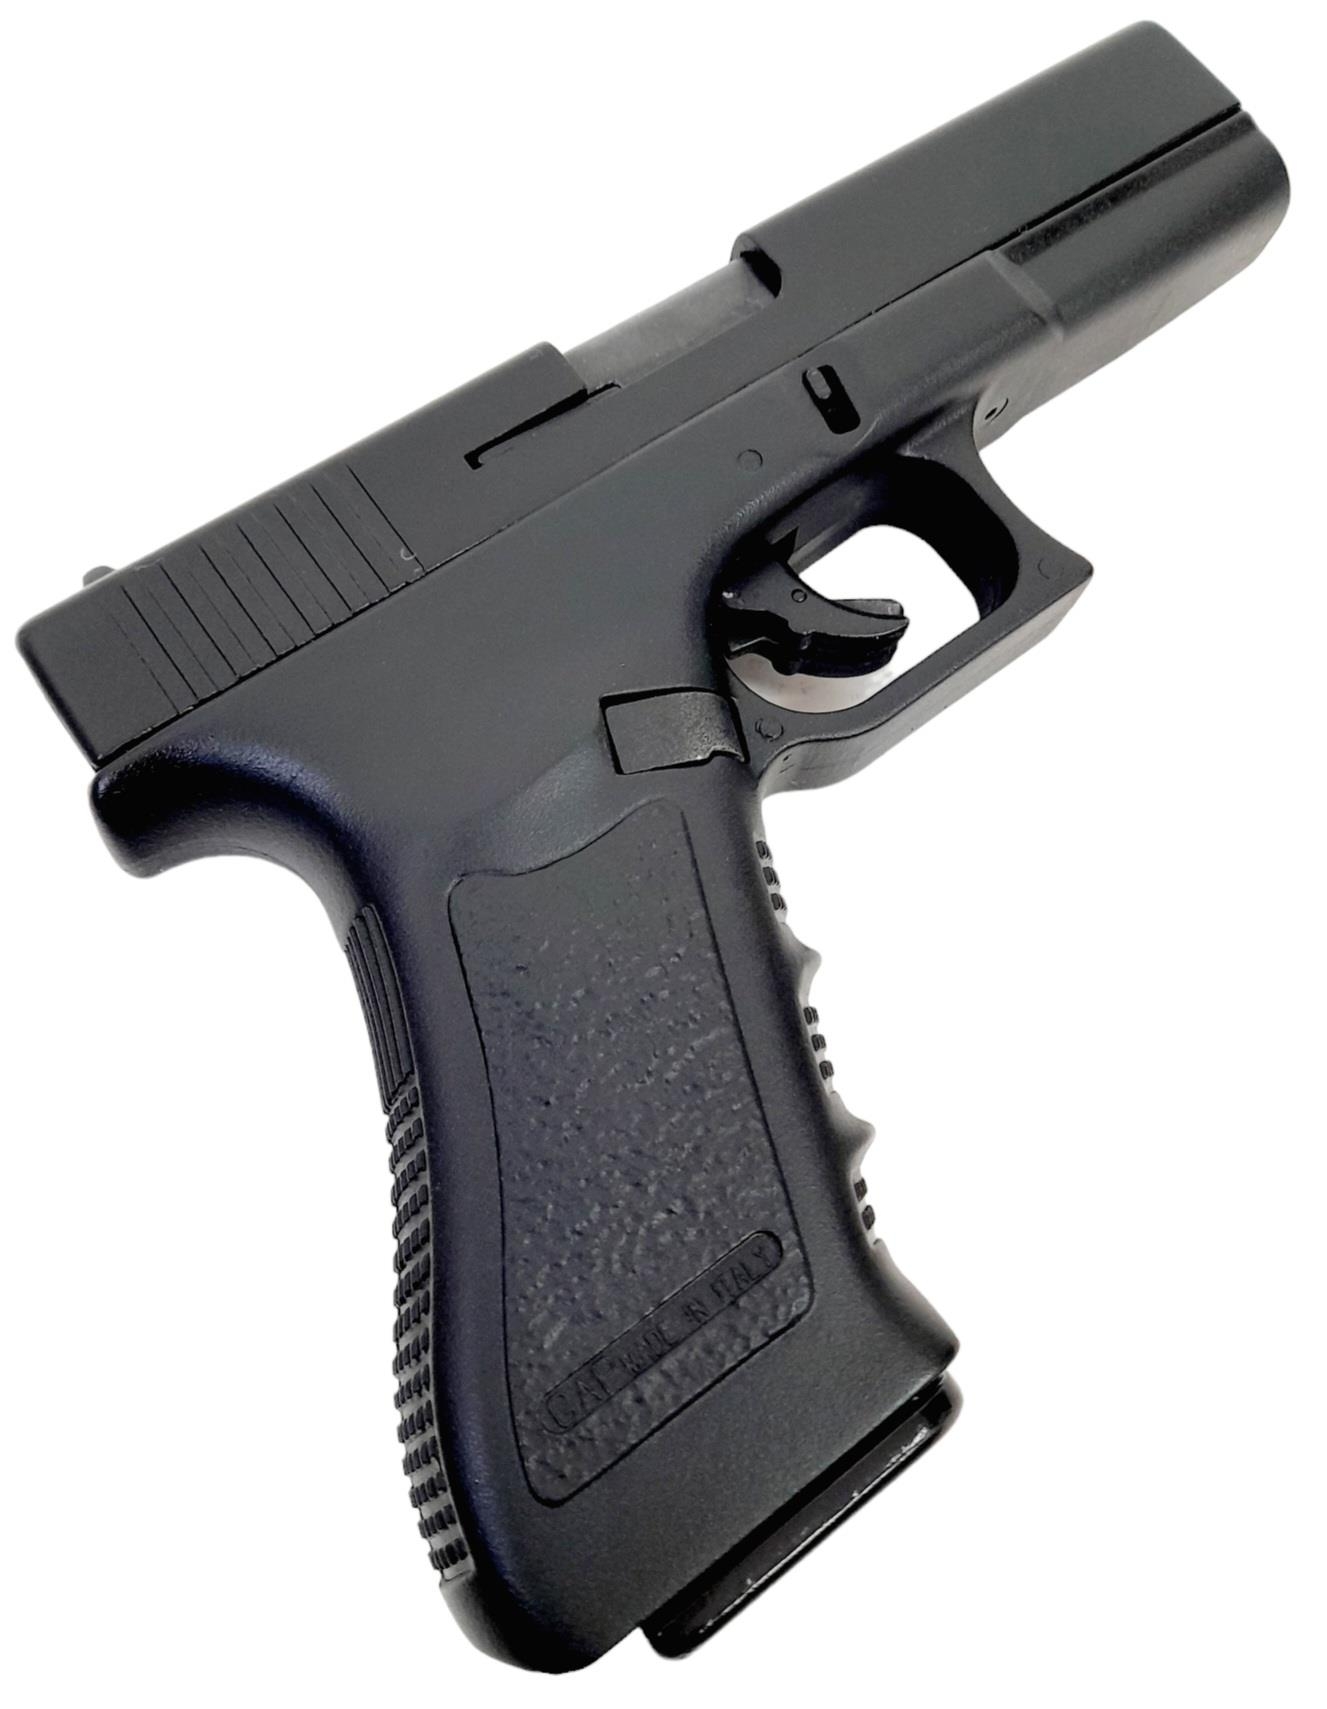 A Glock Gap 8mm Top Vented Blank Firing Pistol. Over 18 only. UK sales only. Blank guns should - Bild 2 aus 5